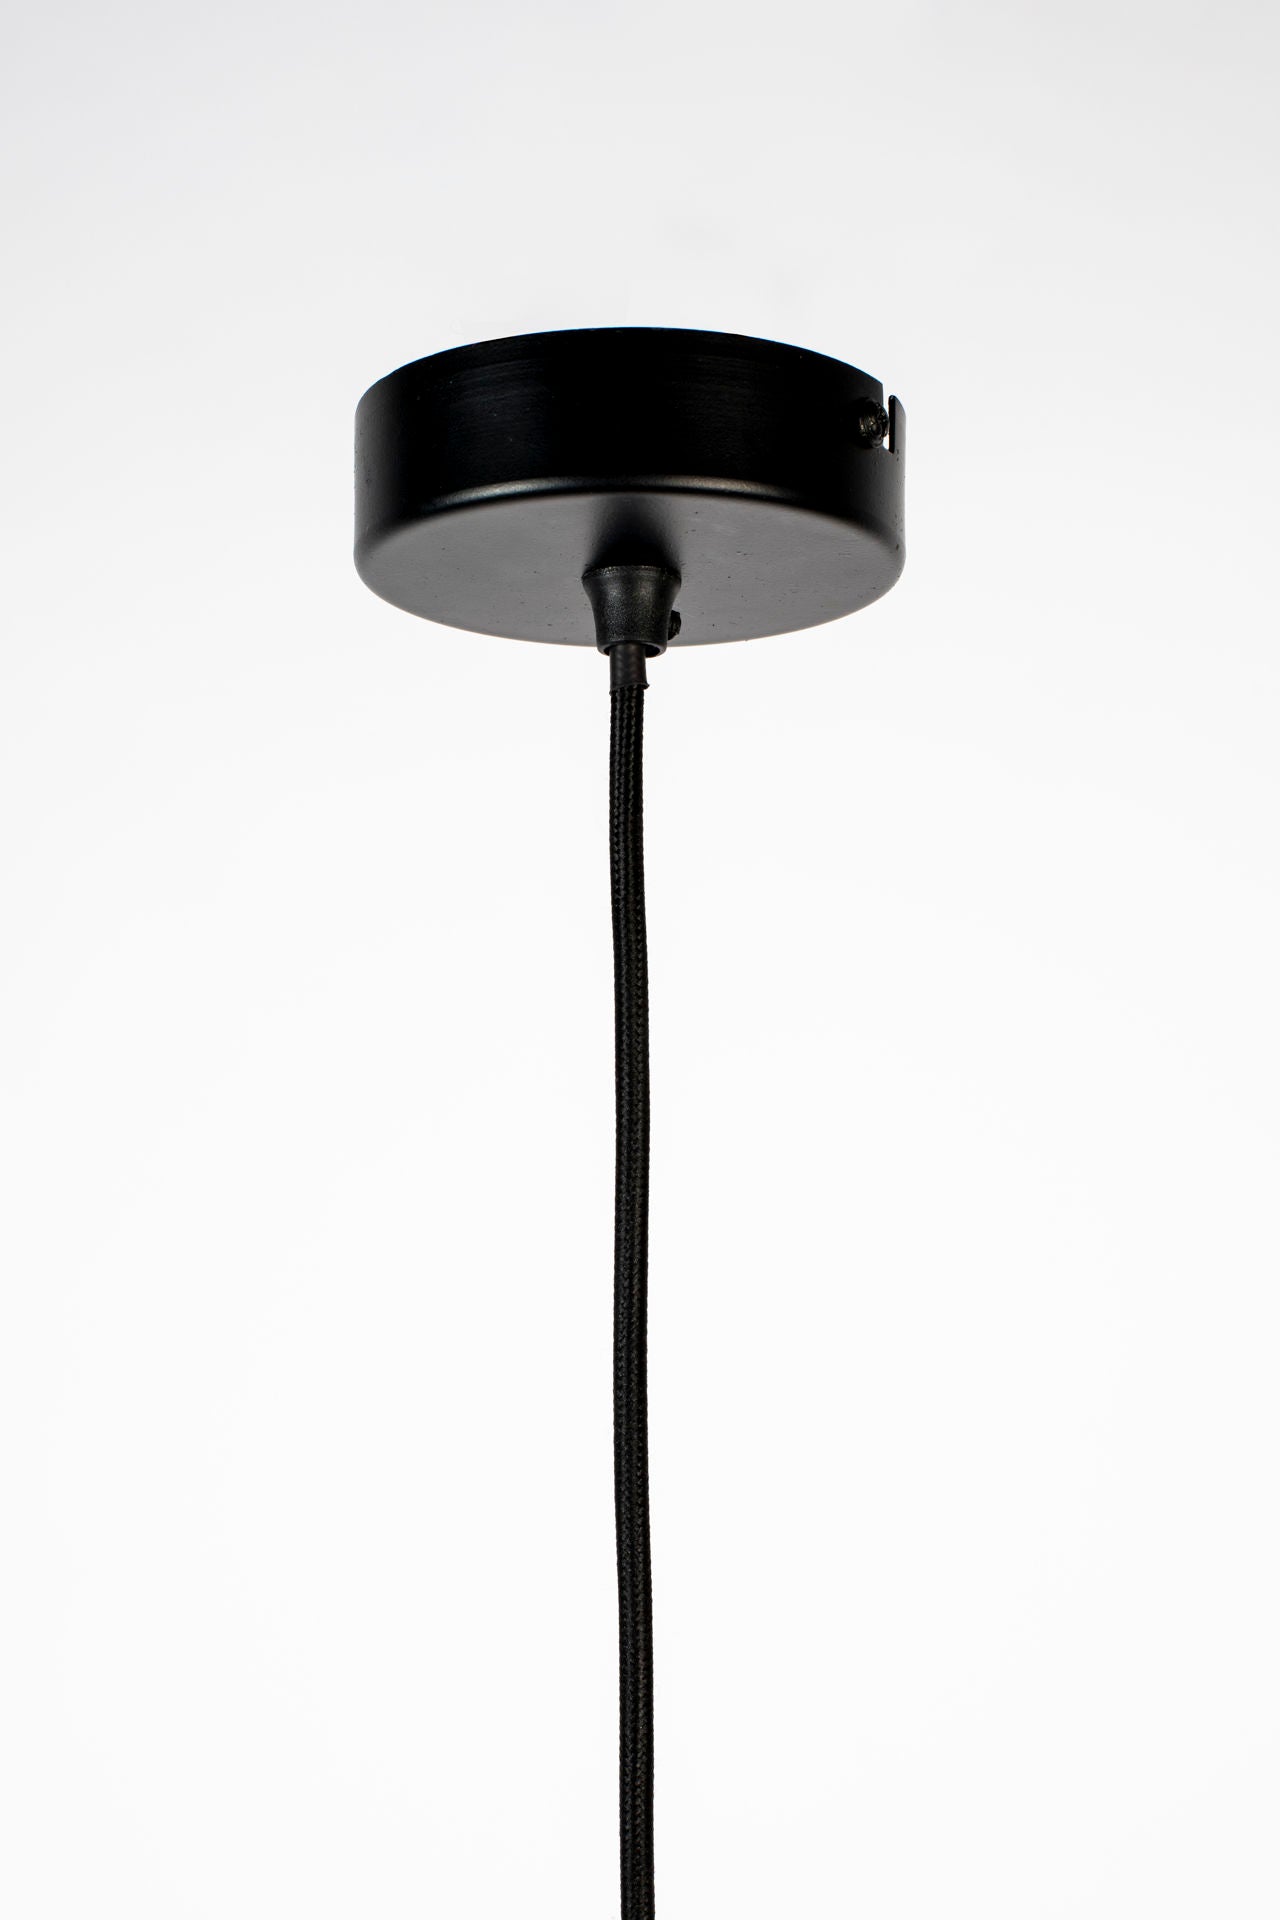 Nancy's Collegedale Hanglamp - Modern - Zwart, Naturel, Bruin - Staal, Riet, Pvc - 30 cm x 30 cm x 145 cm